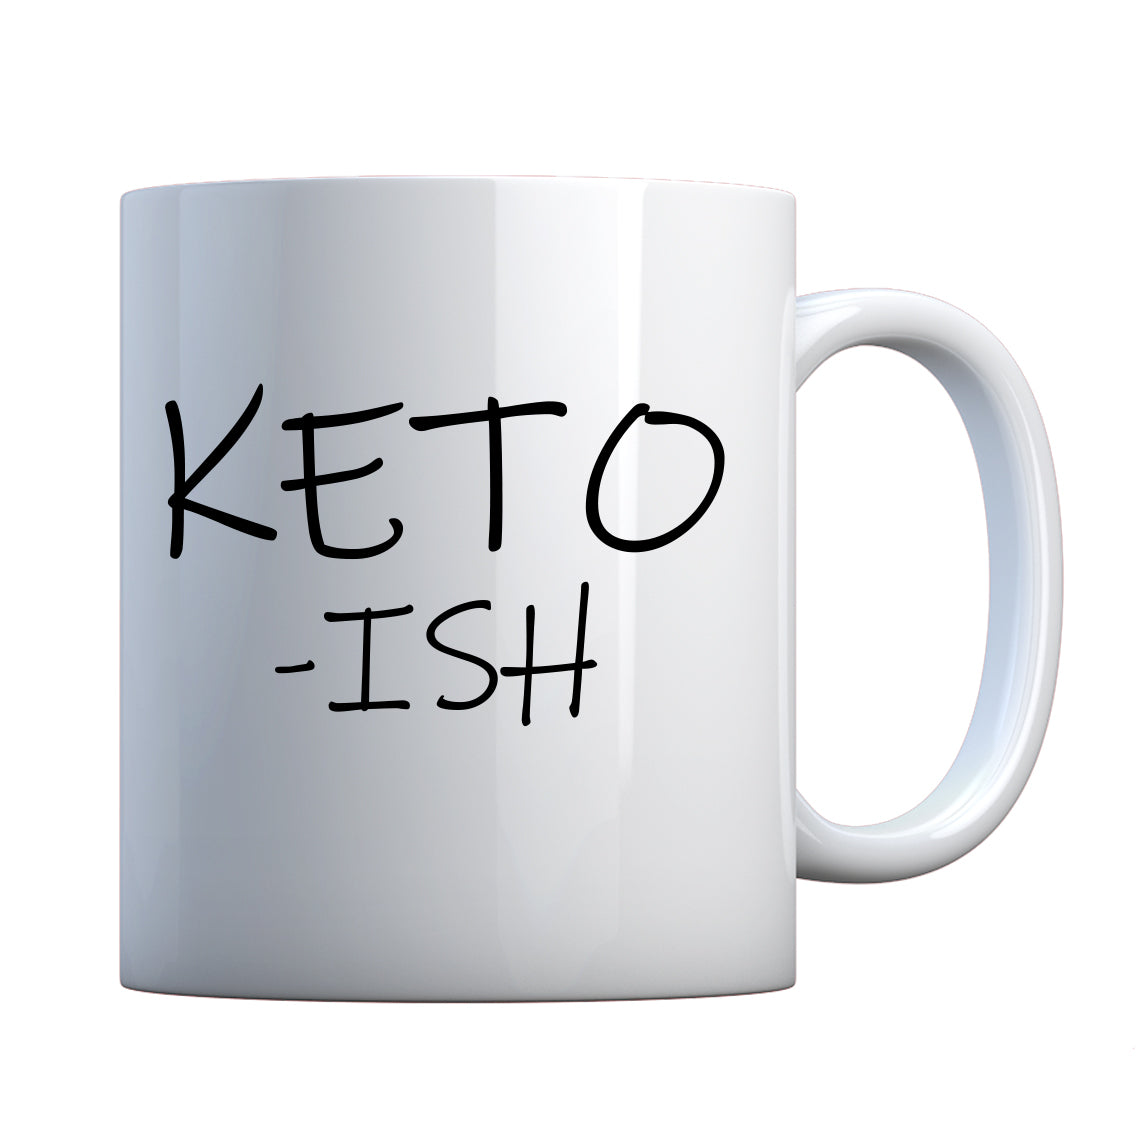 KETO -ish Ceramic Gift Mug